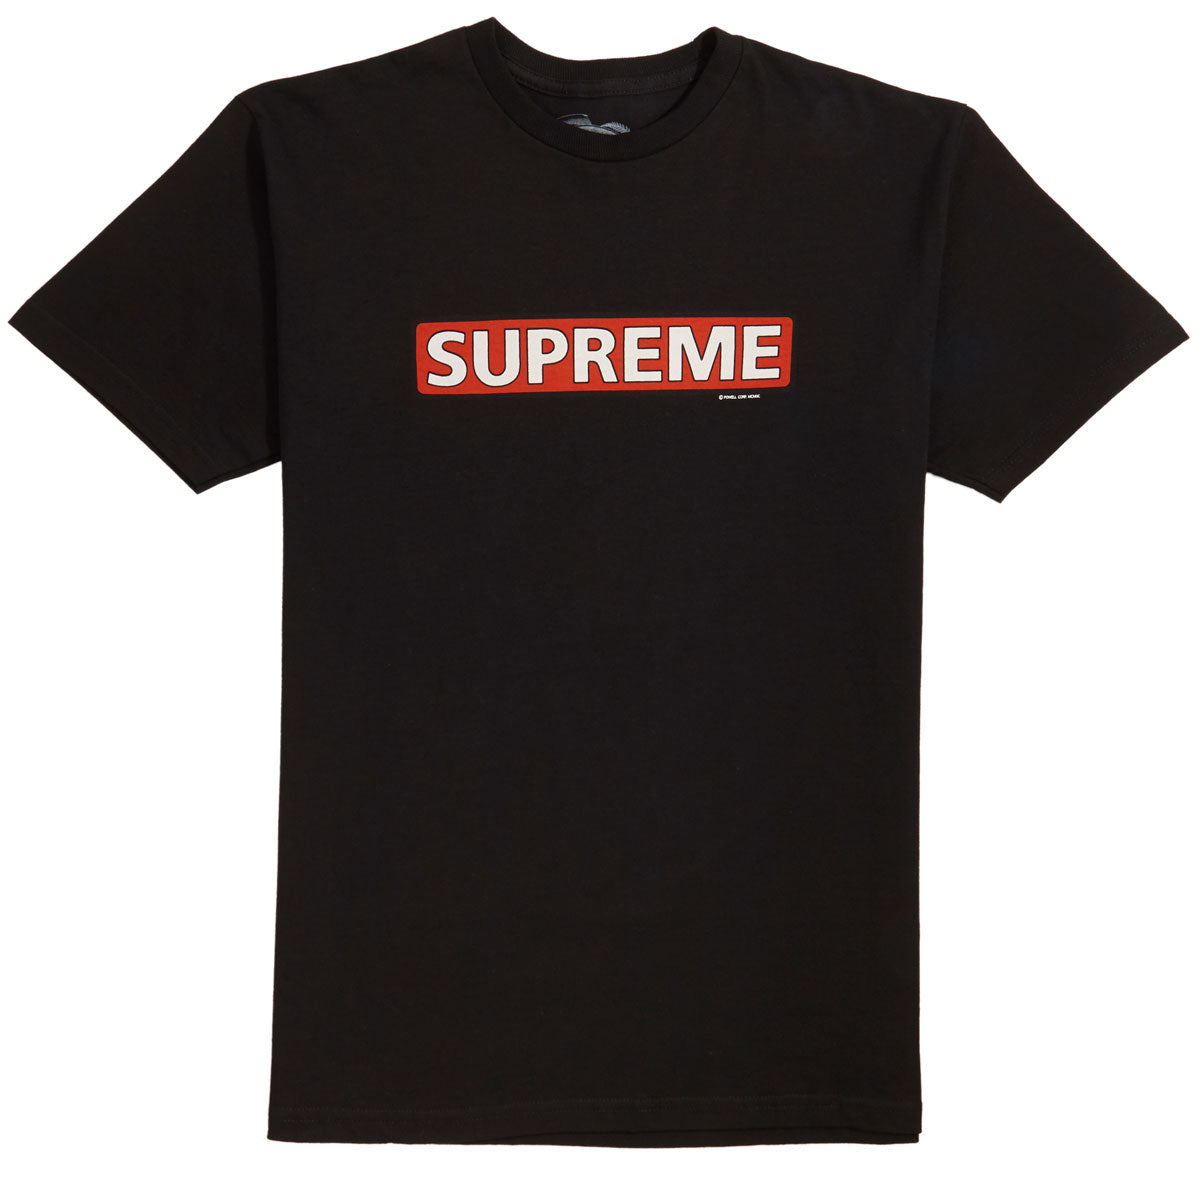 Powell-Peralta Supreme T-Shirt - Black image 1